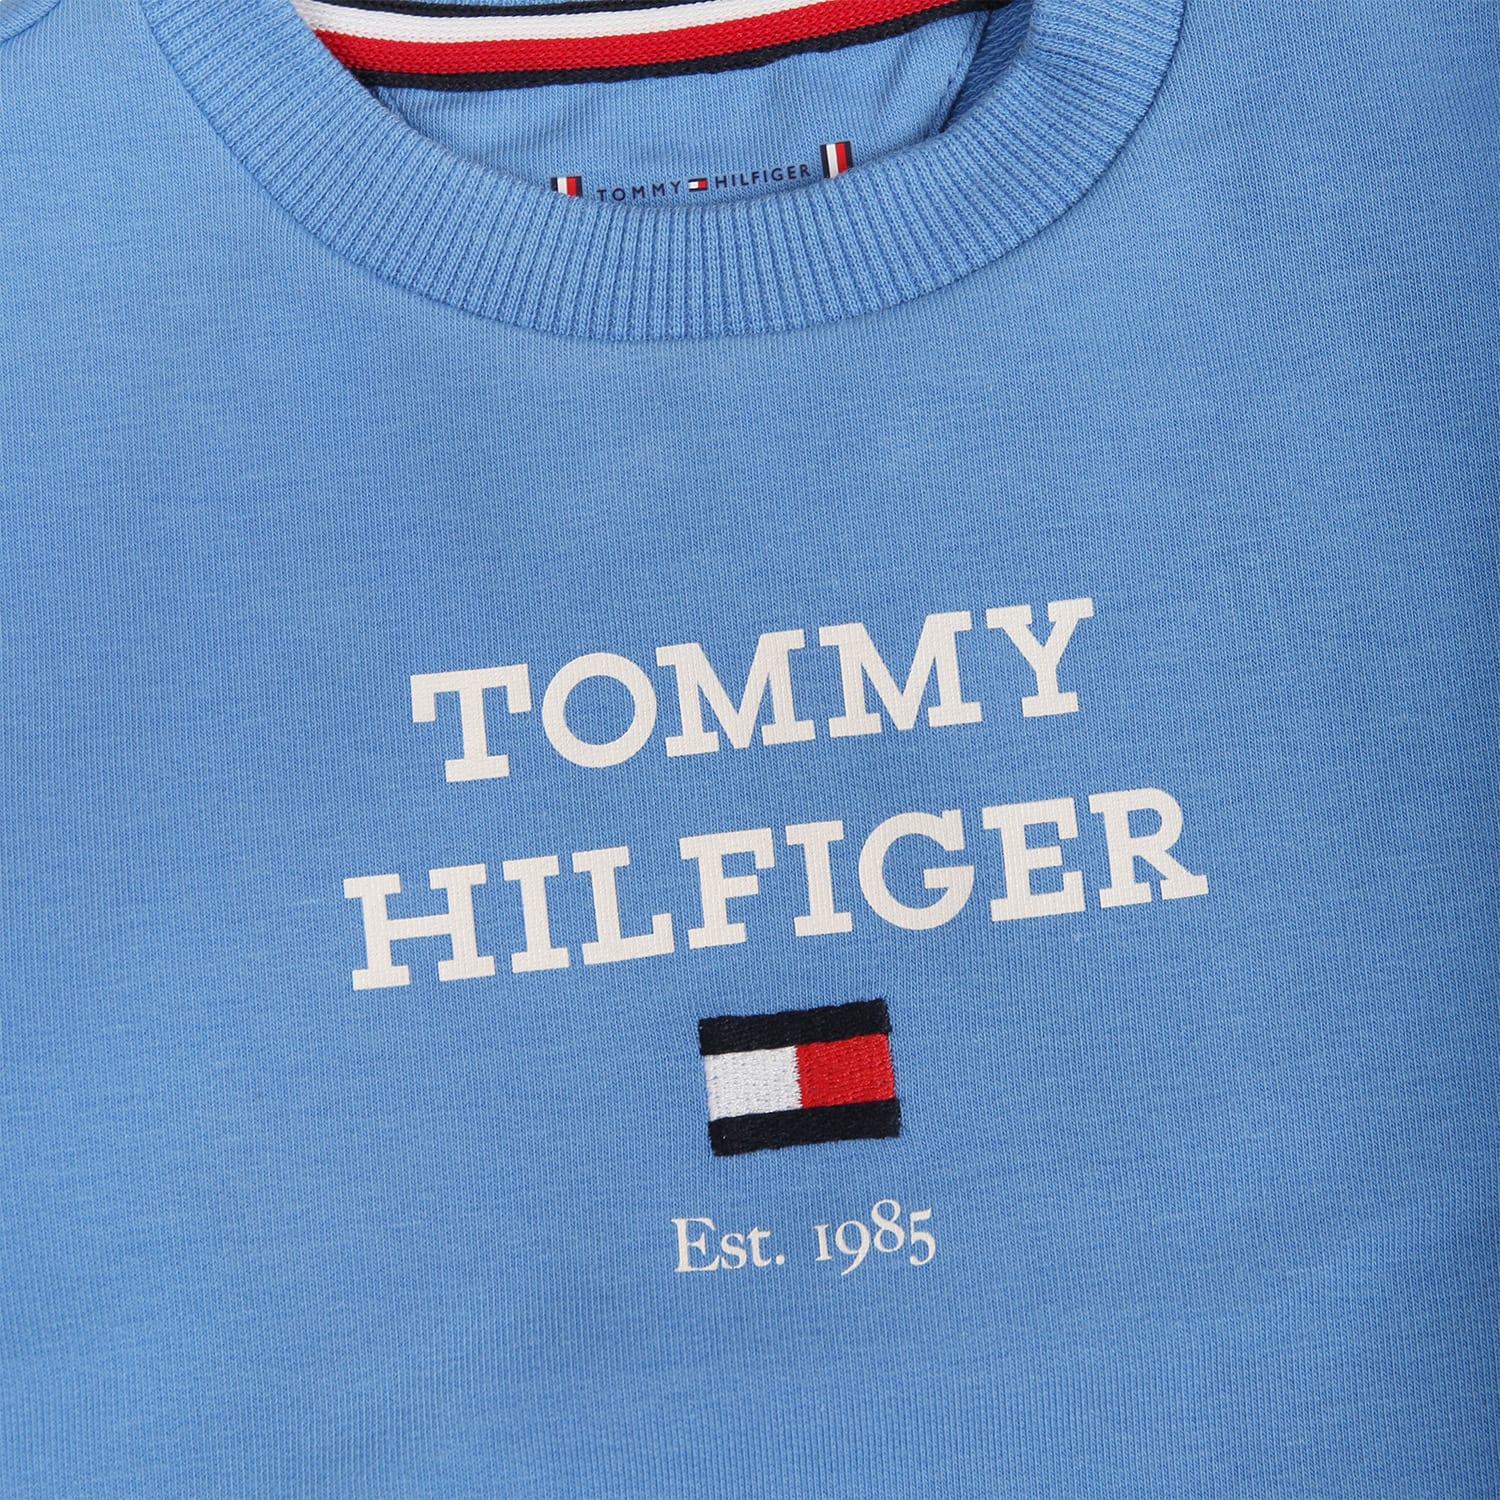 Shop Tommy Hilfiger Light Blue Set For Baby Boy With Logo